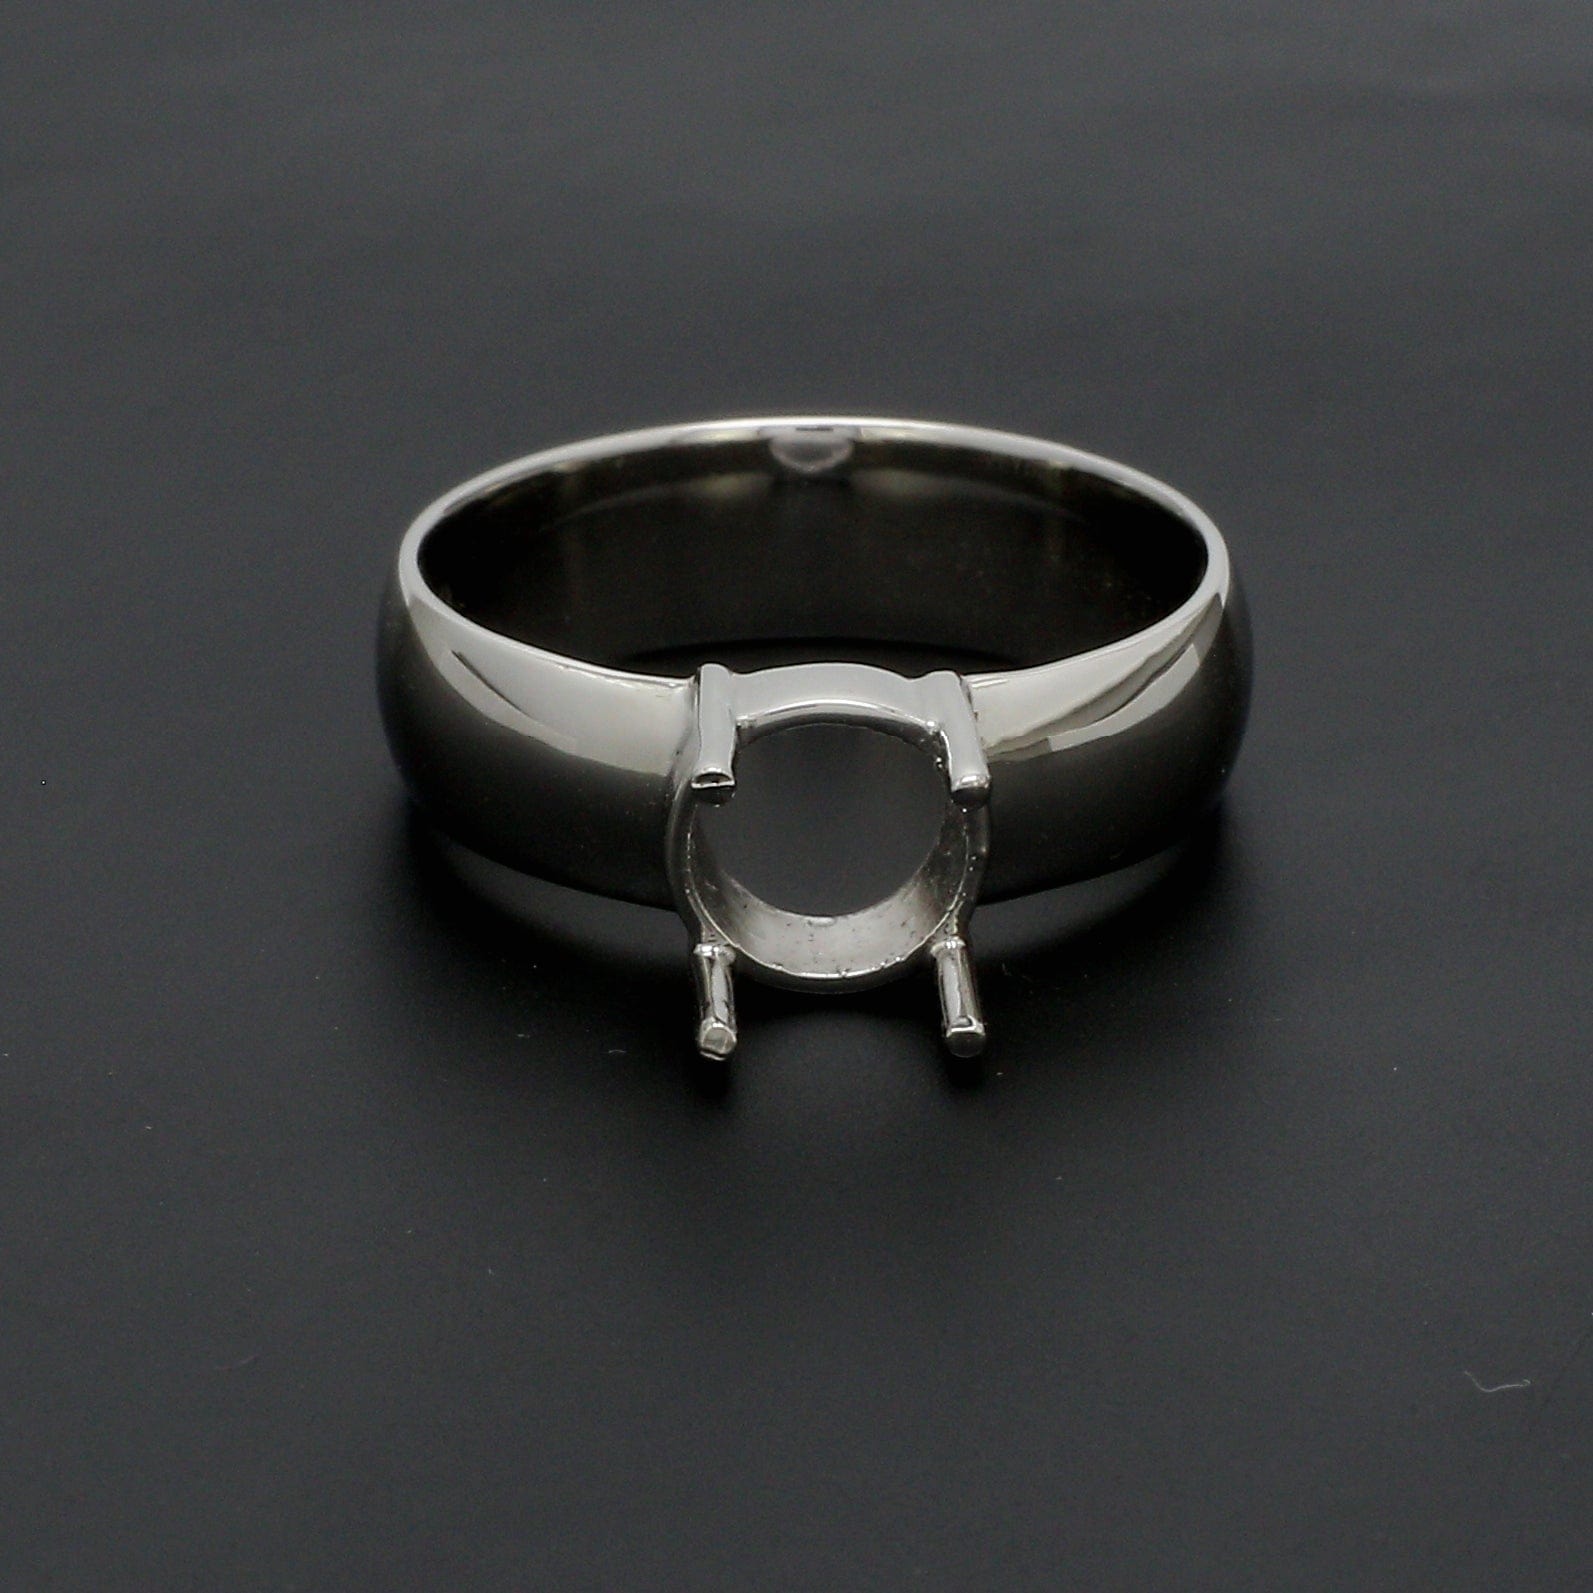 Tall Engagement Ring Settings - High Settings for Diamond Rings